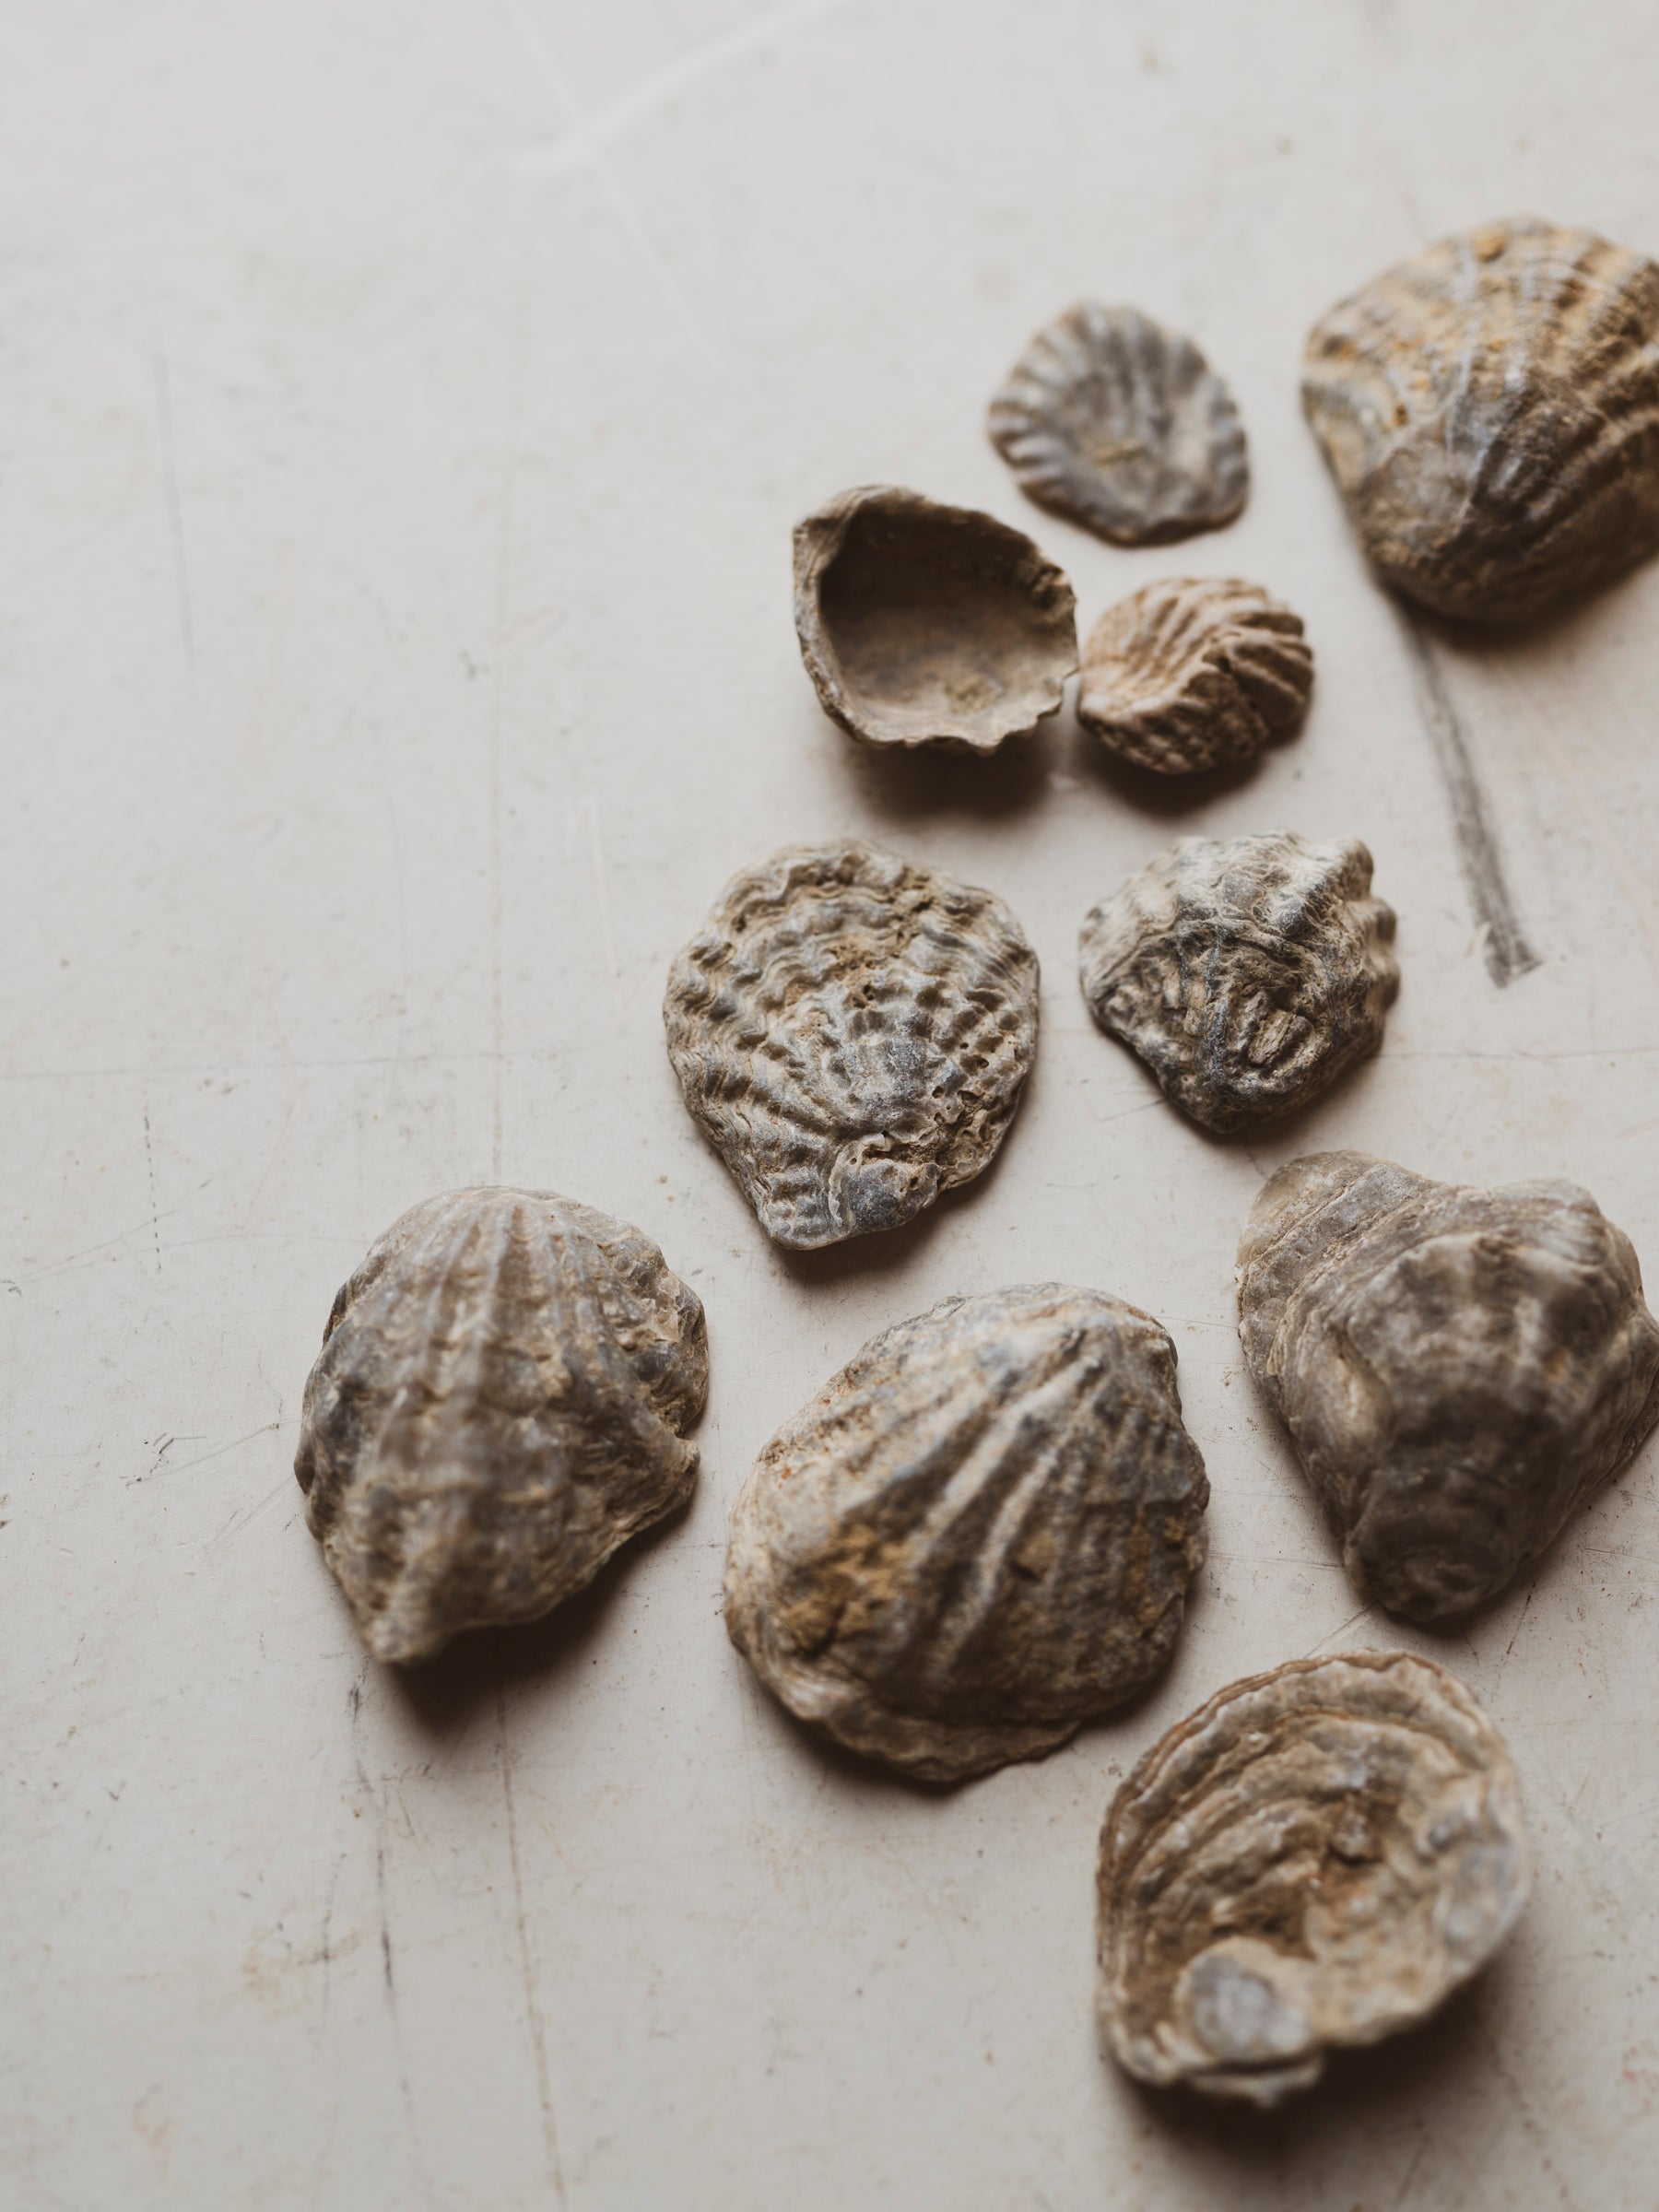 1-2.5" Fossilized Scallop Chesapecten Jeffersonius Shell, RM515